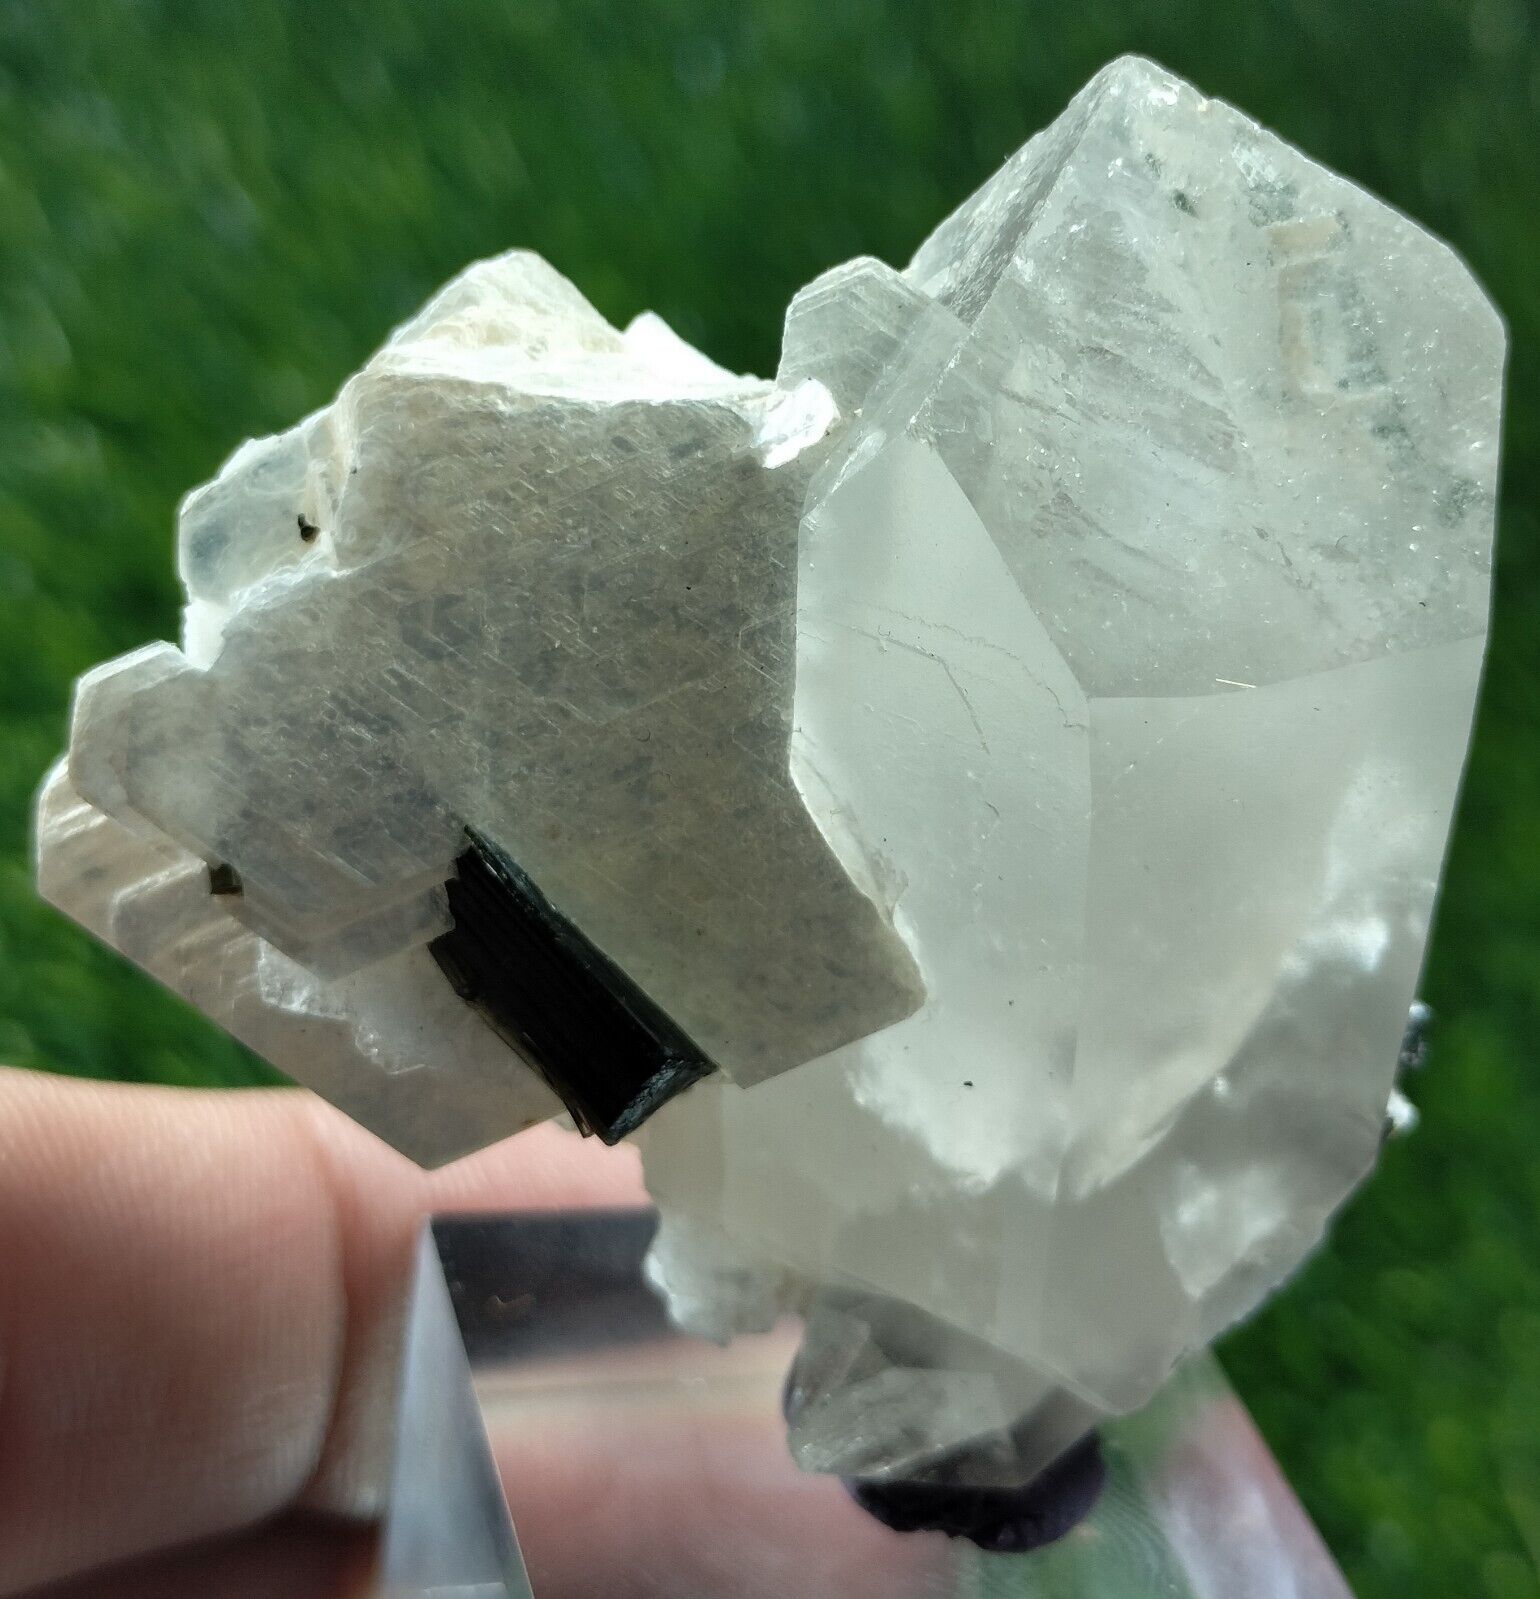 Black Tourmaline crystals combine with Quartz crystal & mica beautiful specimen.